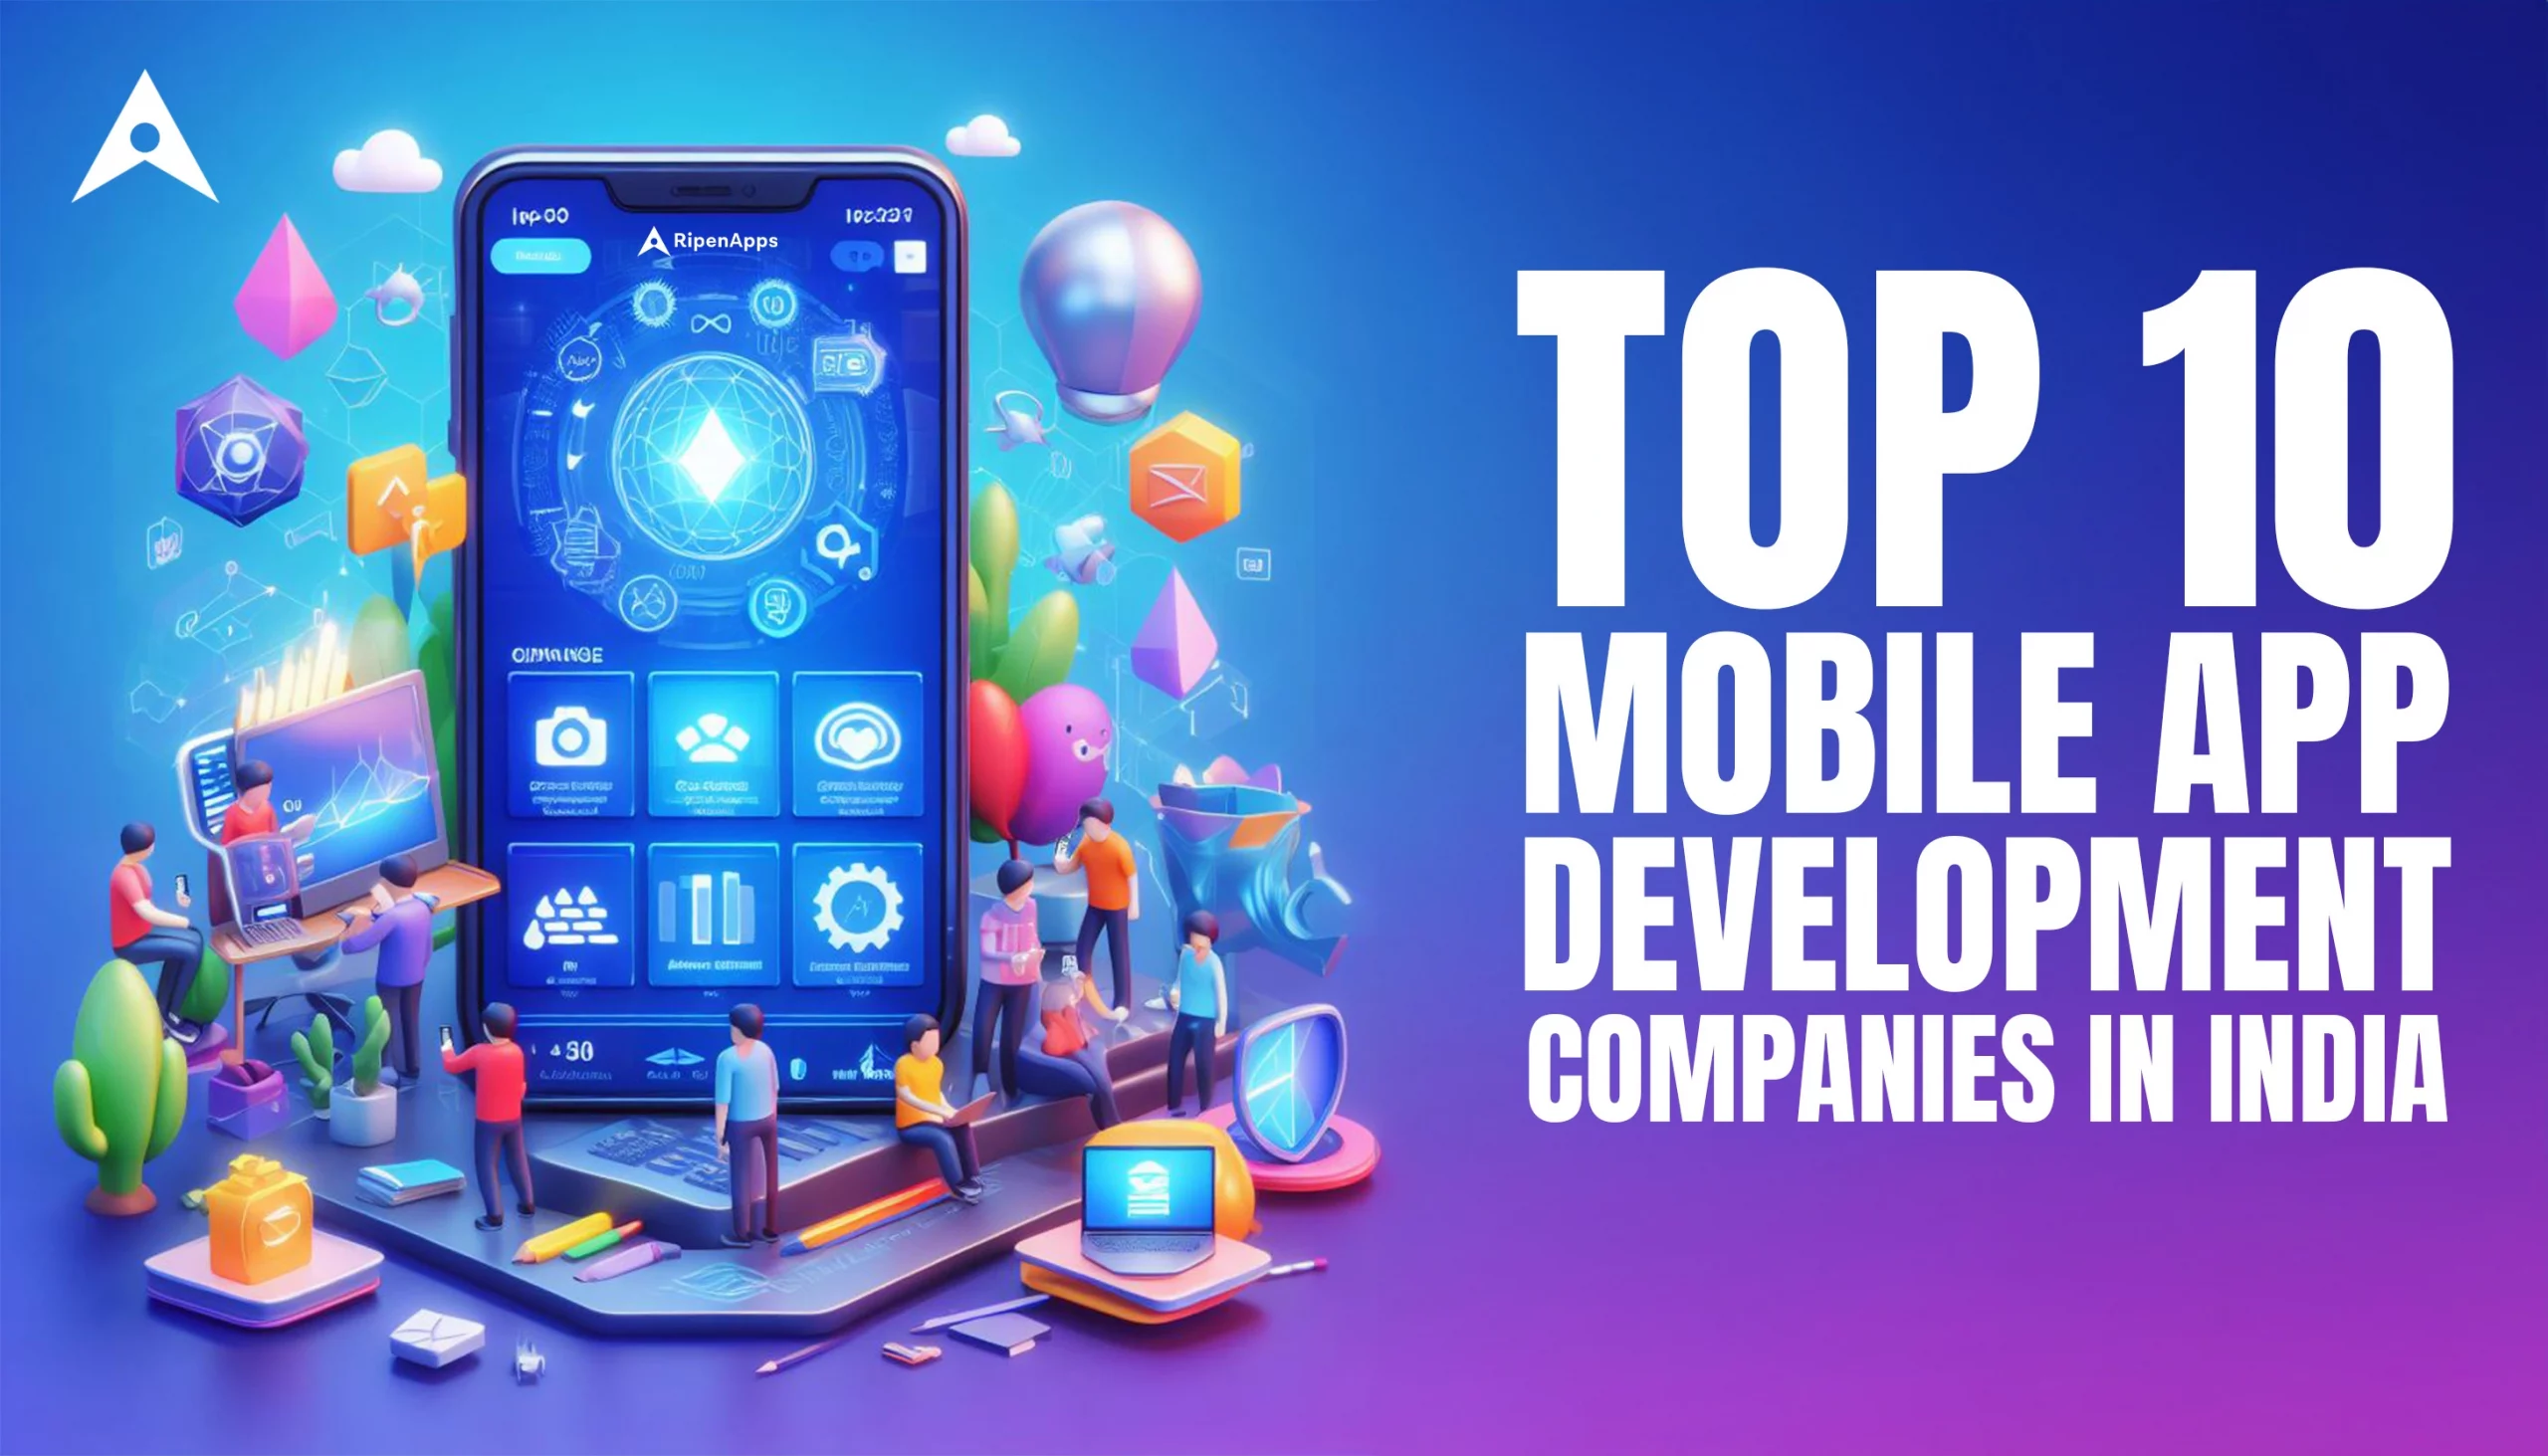 List of Top 10 Mobile App Development Companies in India